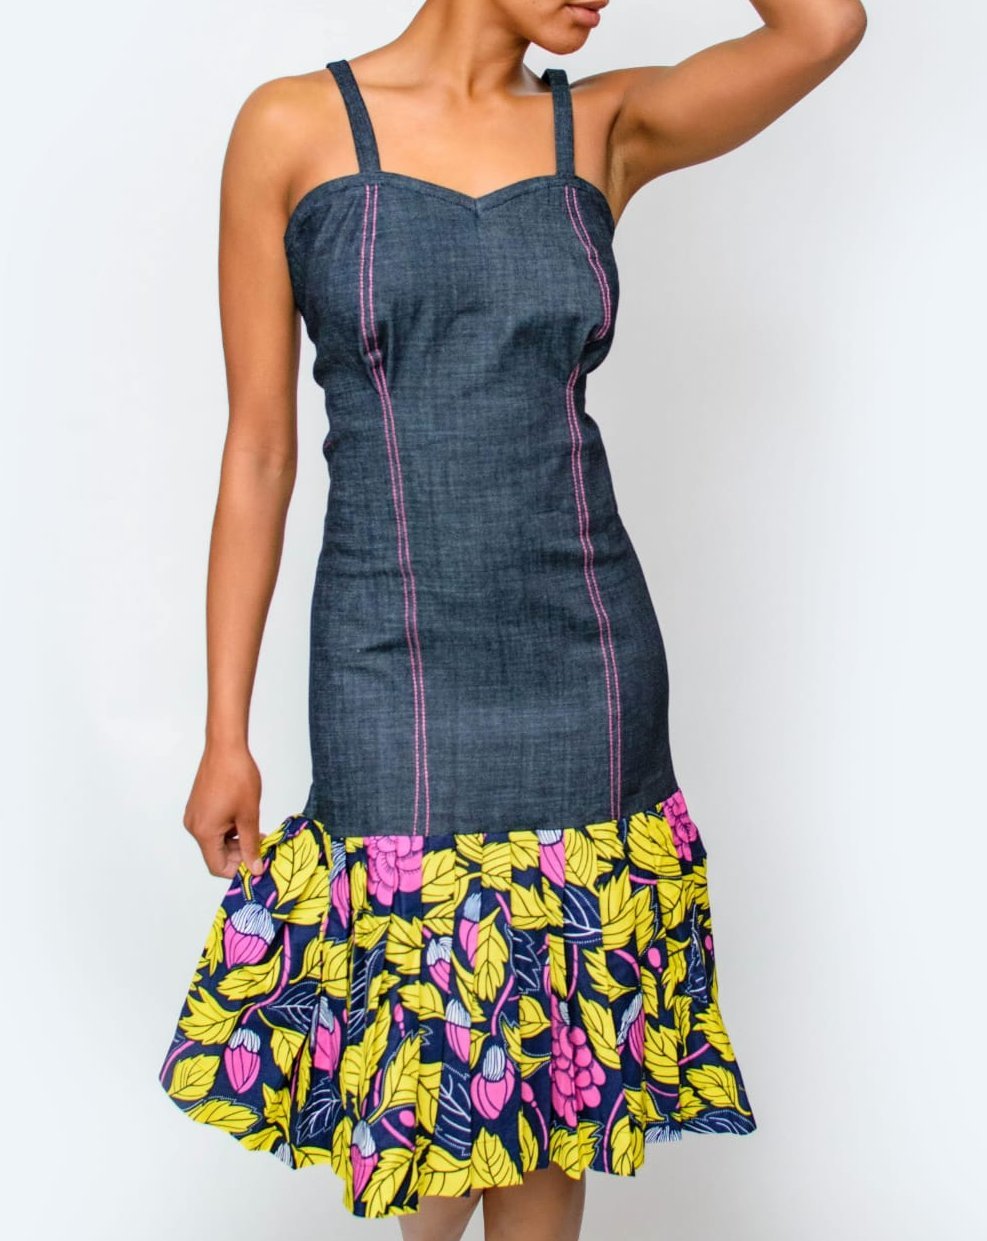 Denim African Print Dress - rtw039 - House of Prints